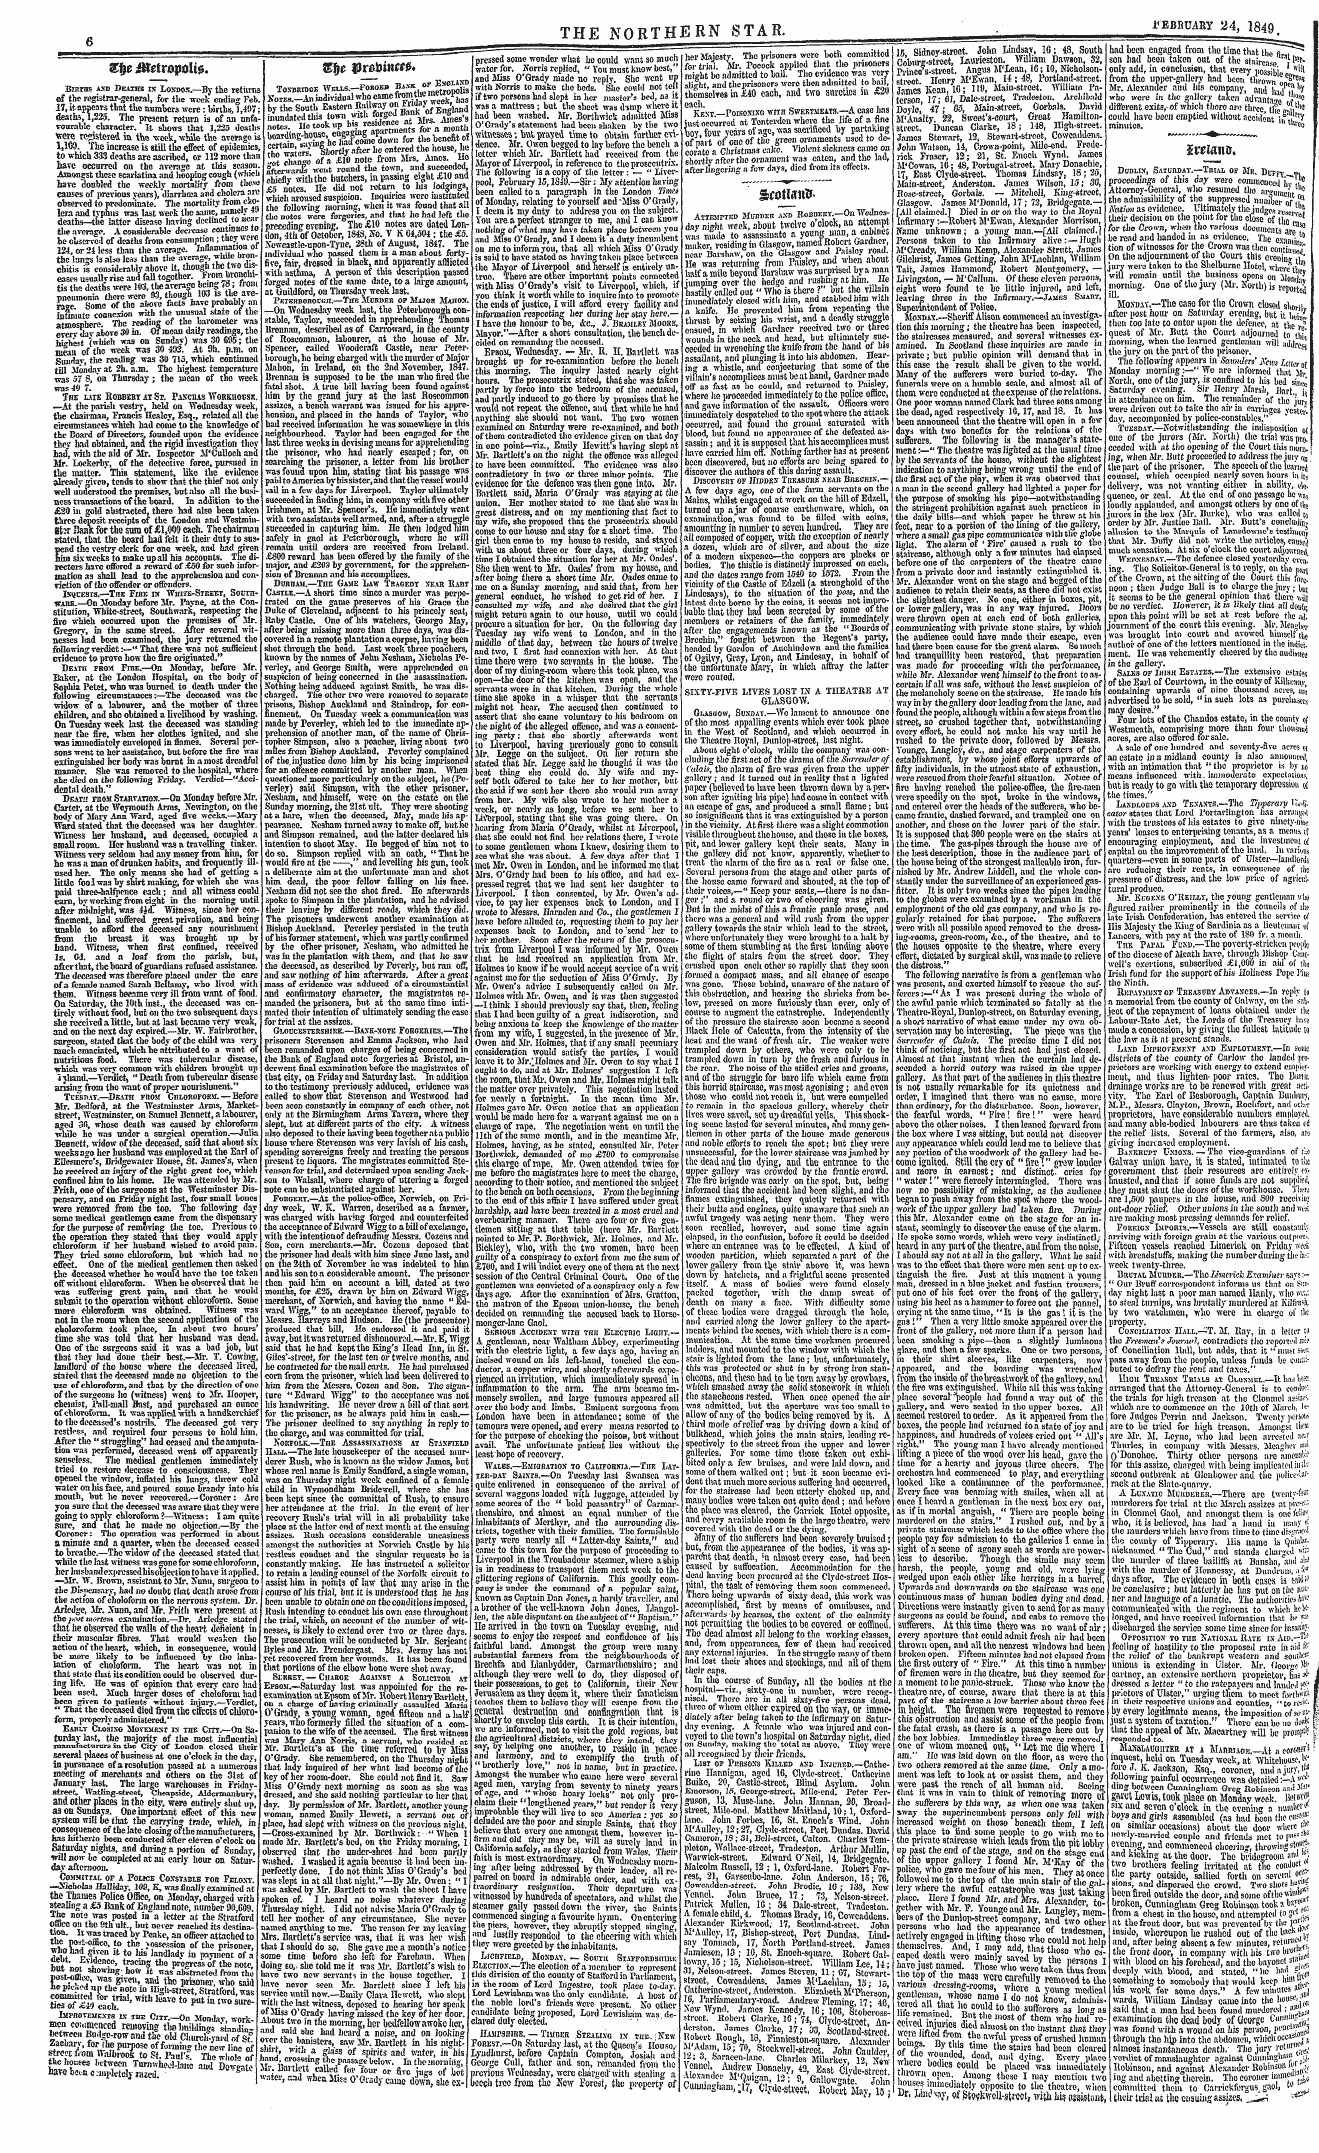 Northern Star (1837-1852): jS F Y, 3rd edition: 6